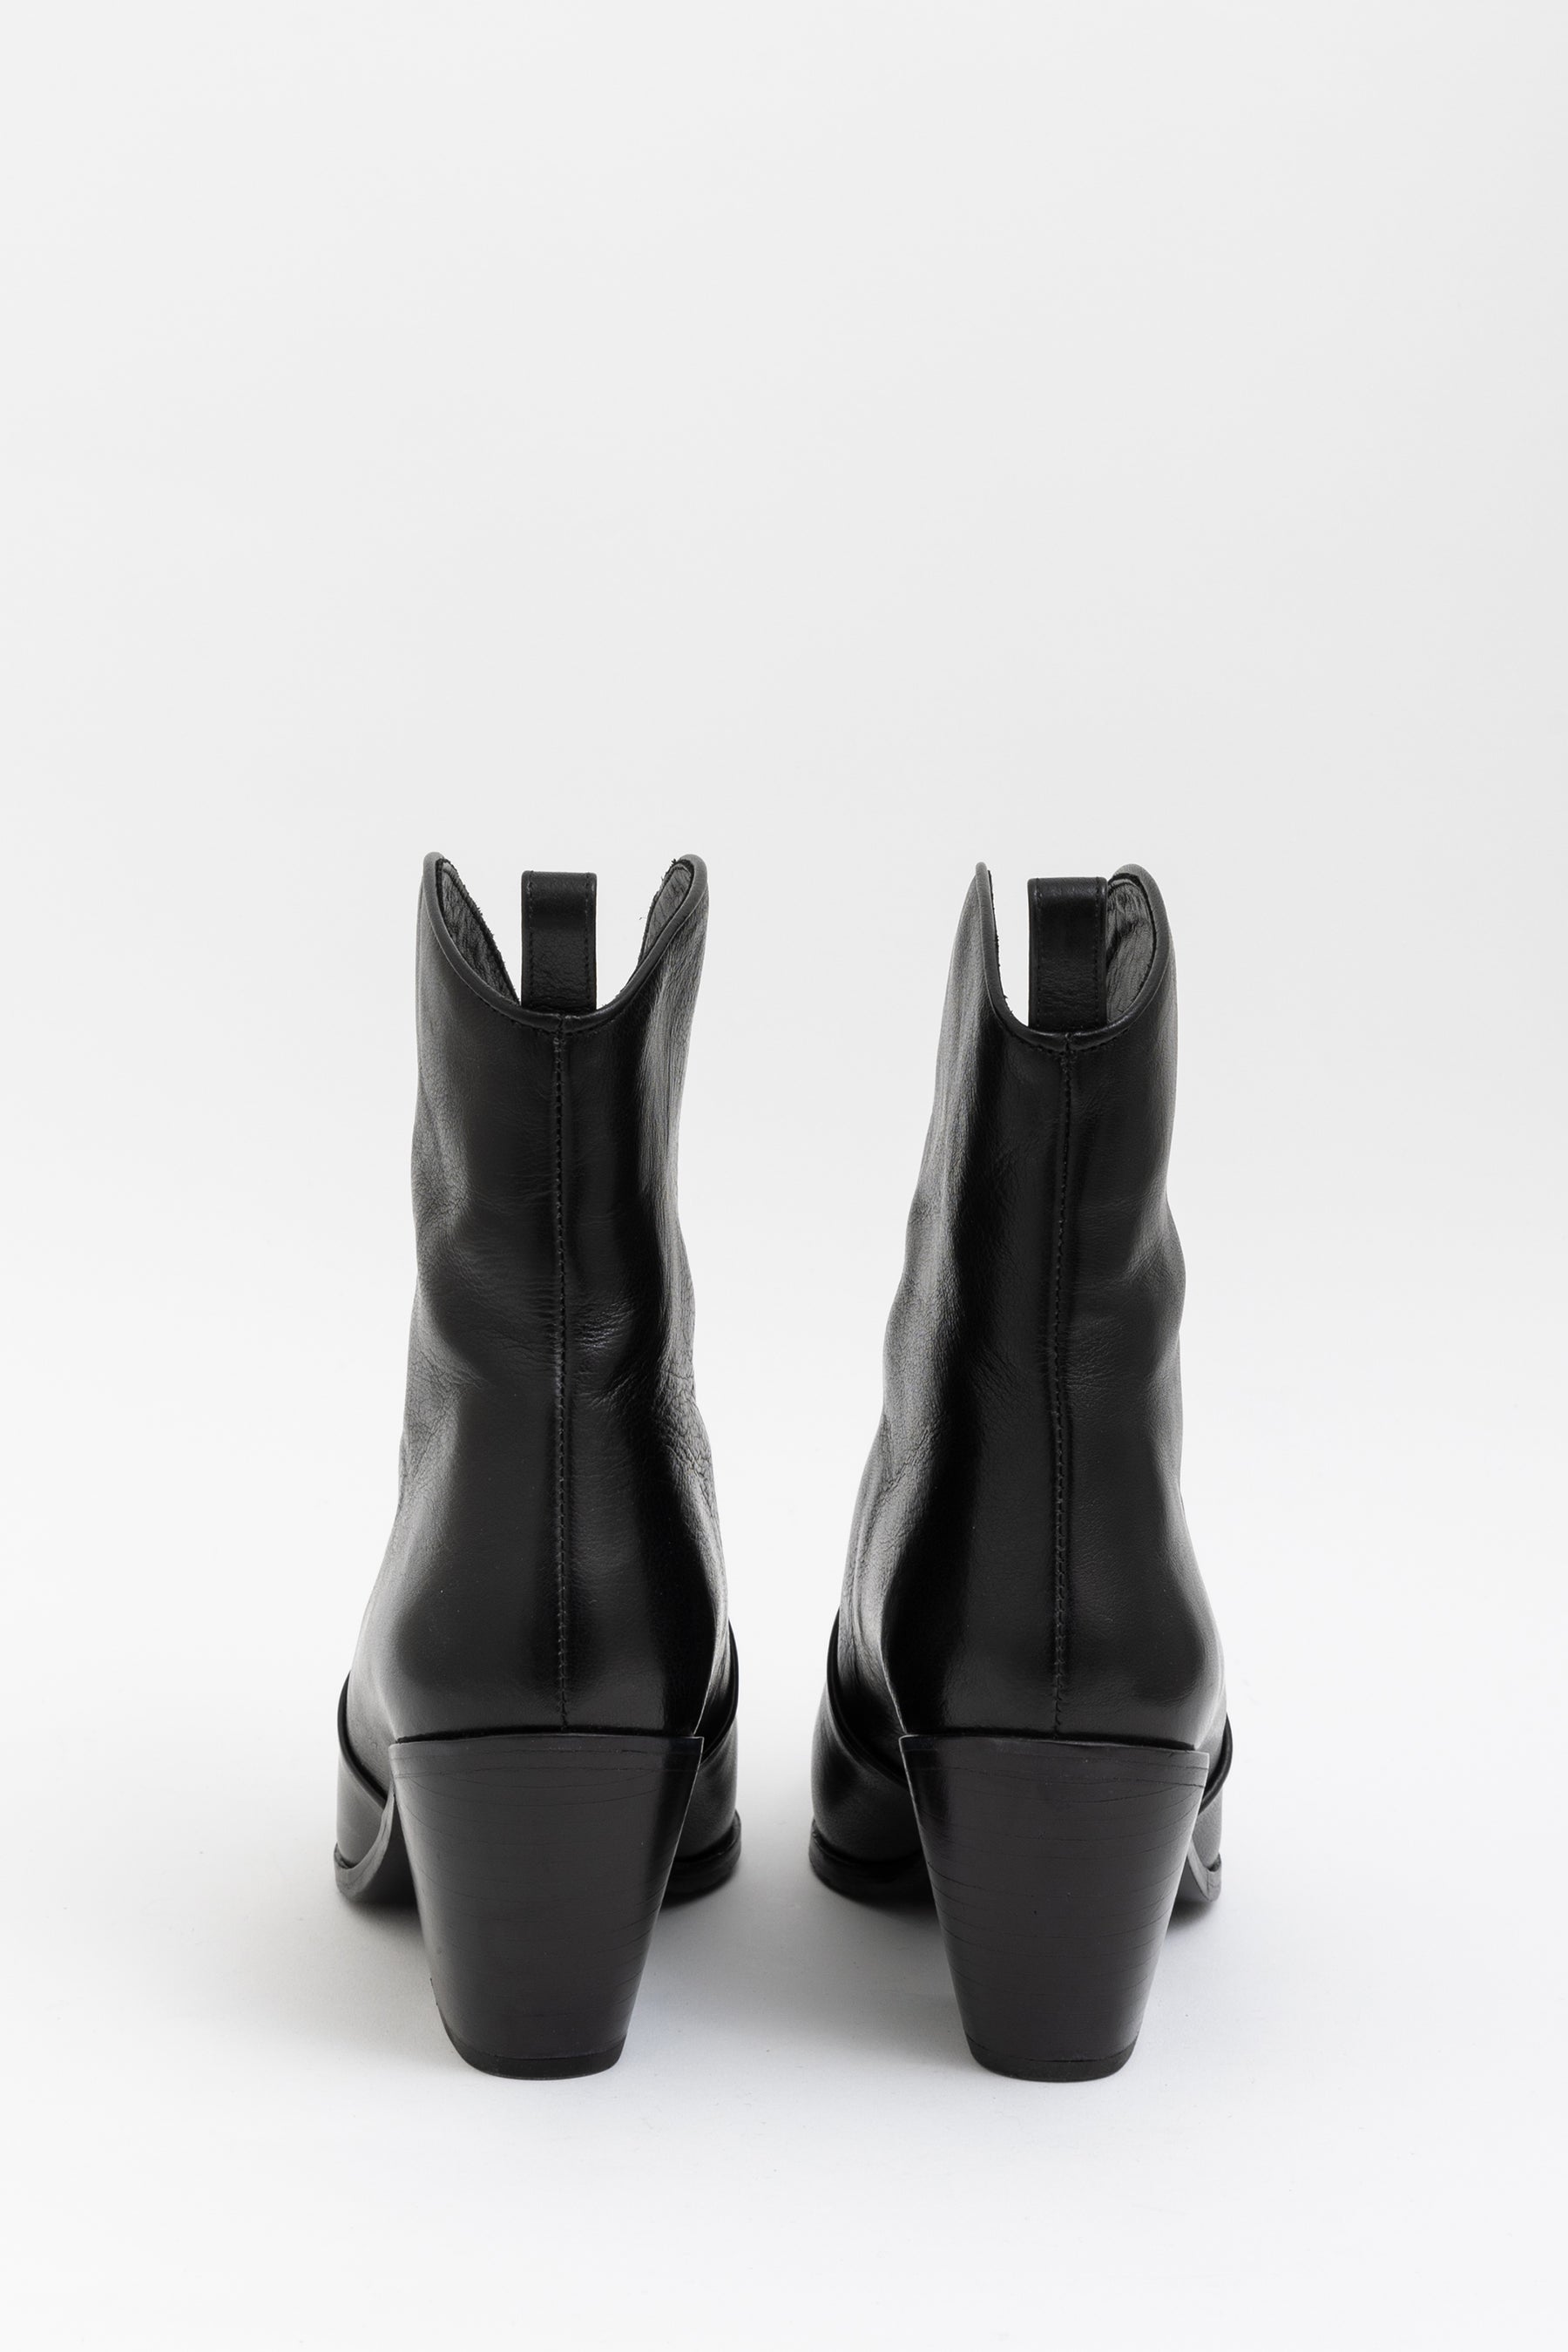 anine-bing-black-easton-boots-metal-toe-cap-40-8065